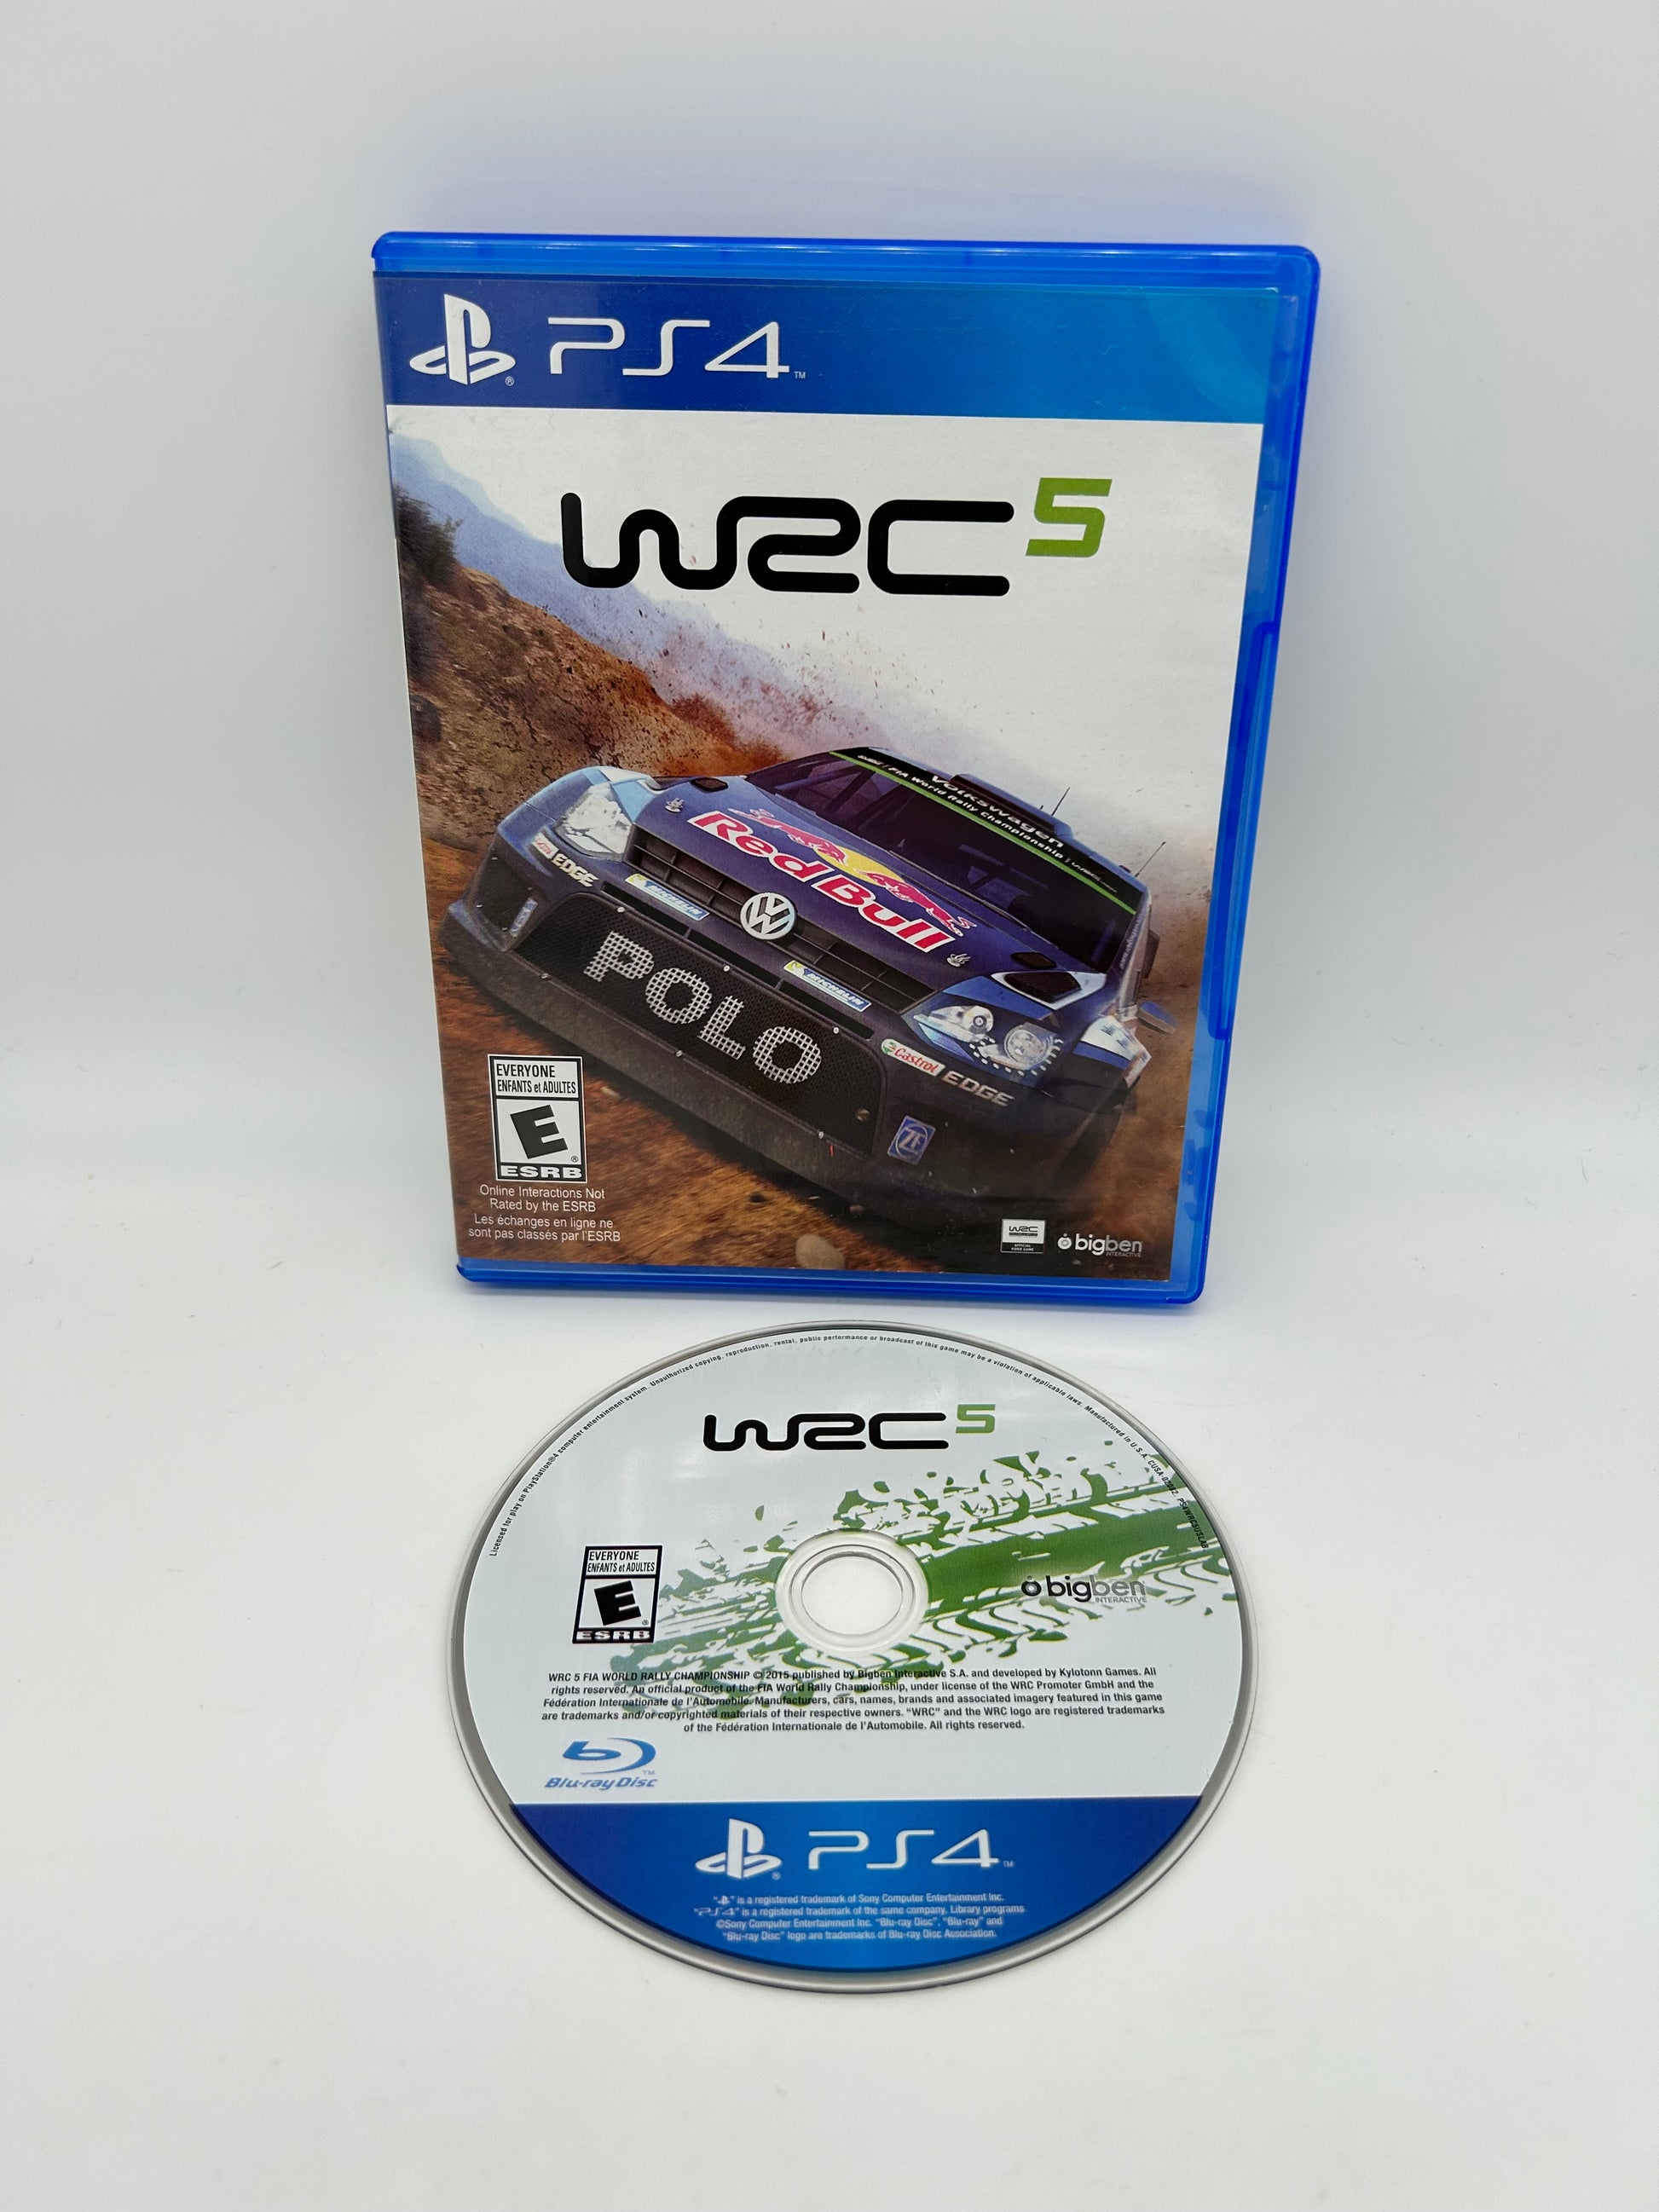 PiXEL-RETRO.COM : SONY PLAYSTATION 4 (PS4) COMPLETE CIB BOX MANUAL GAME NTSC WRC 5